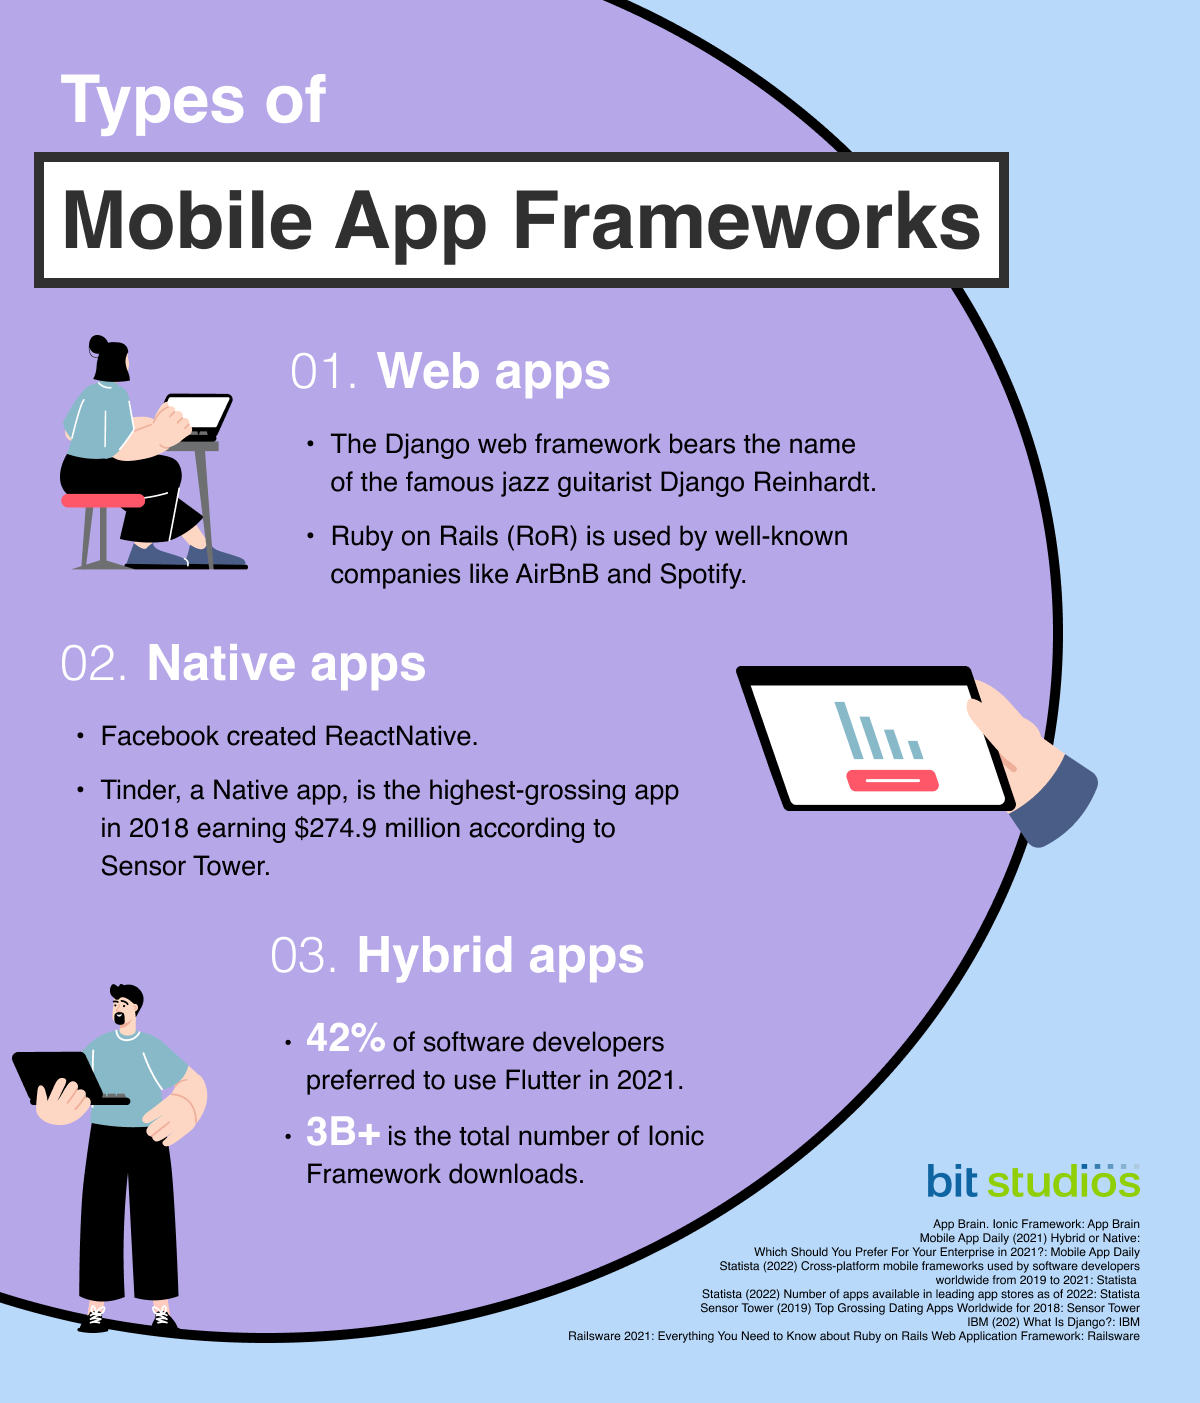 Types of Mobile App Frameworks